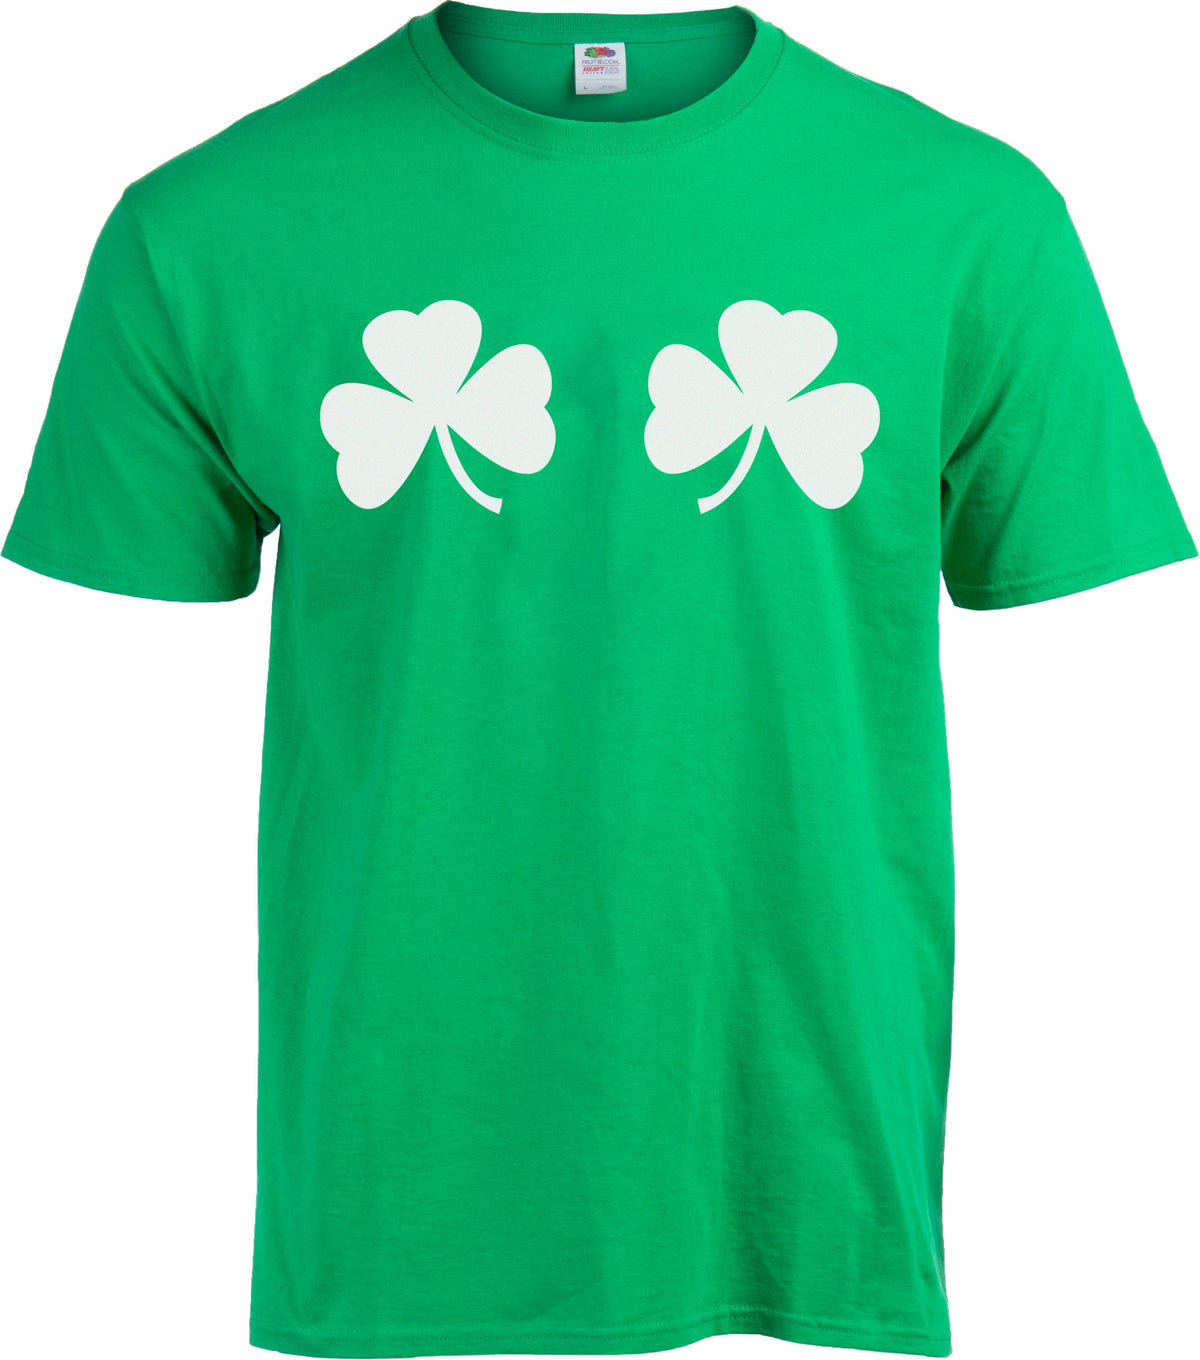 Nice Shamrocks - St. Patrick's Day Raunchy Humor Sex Party T-shirt - Women's